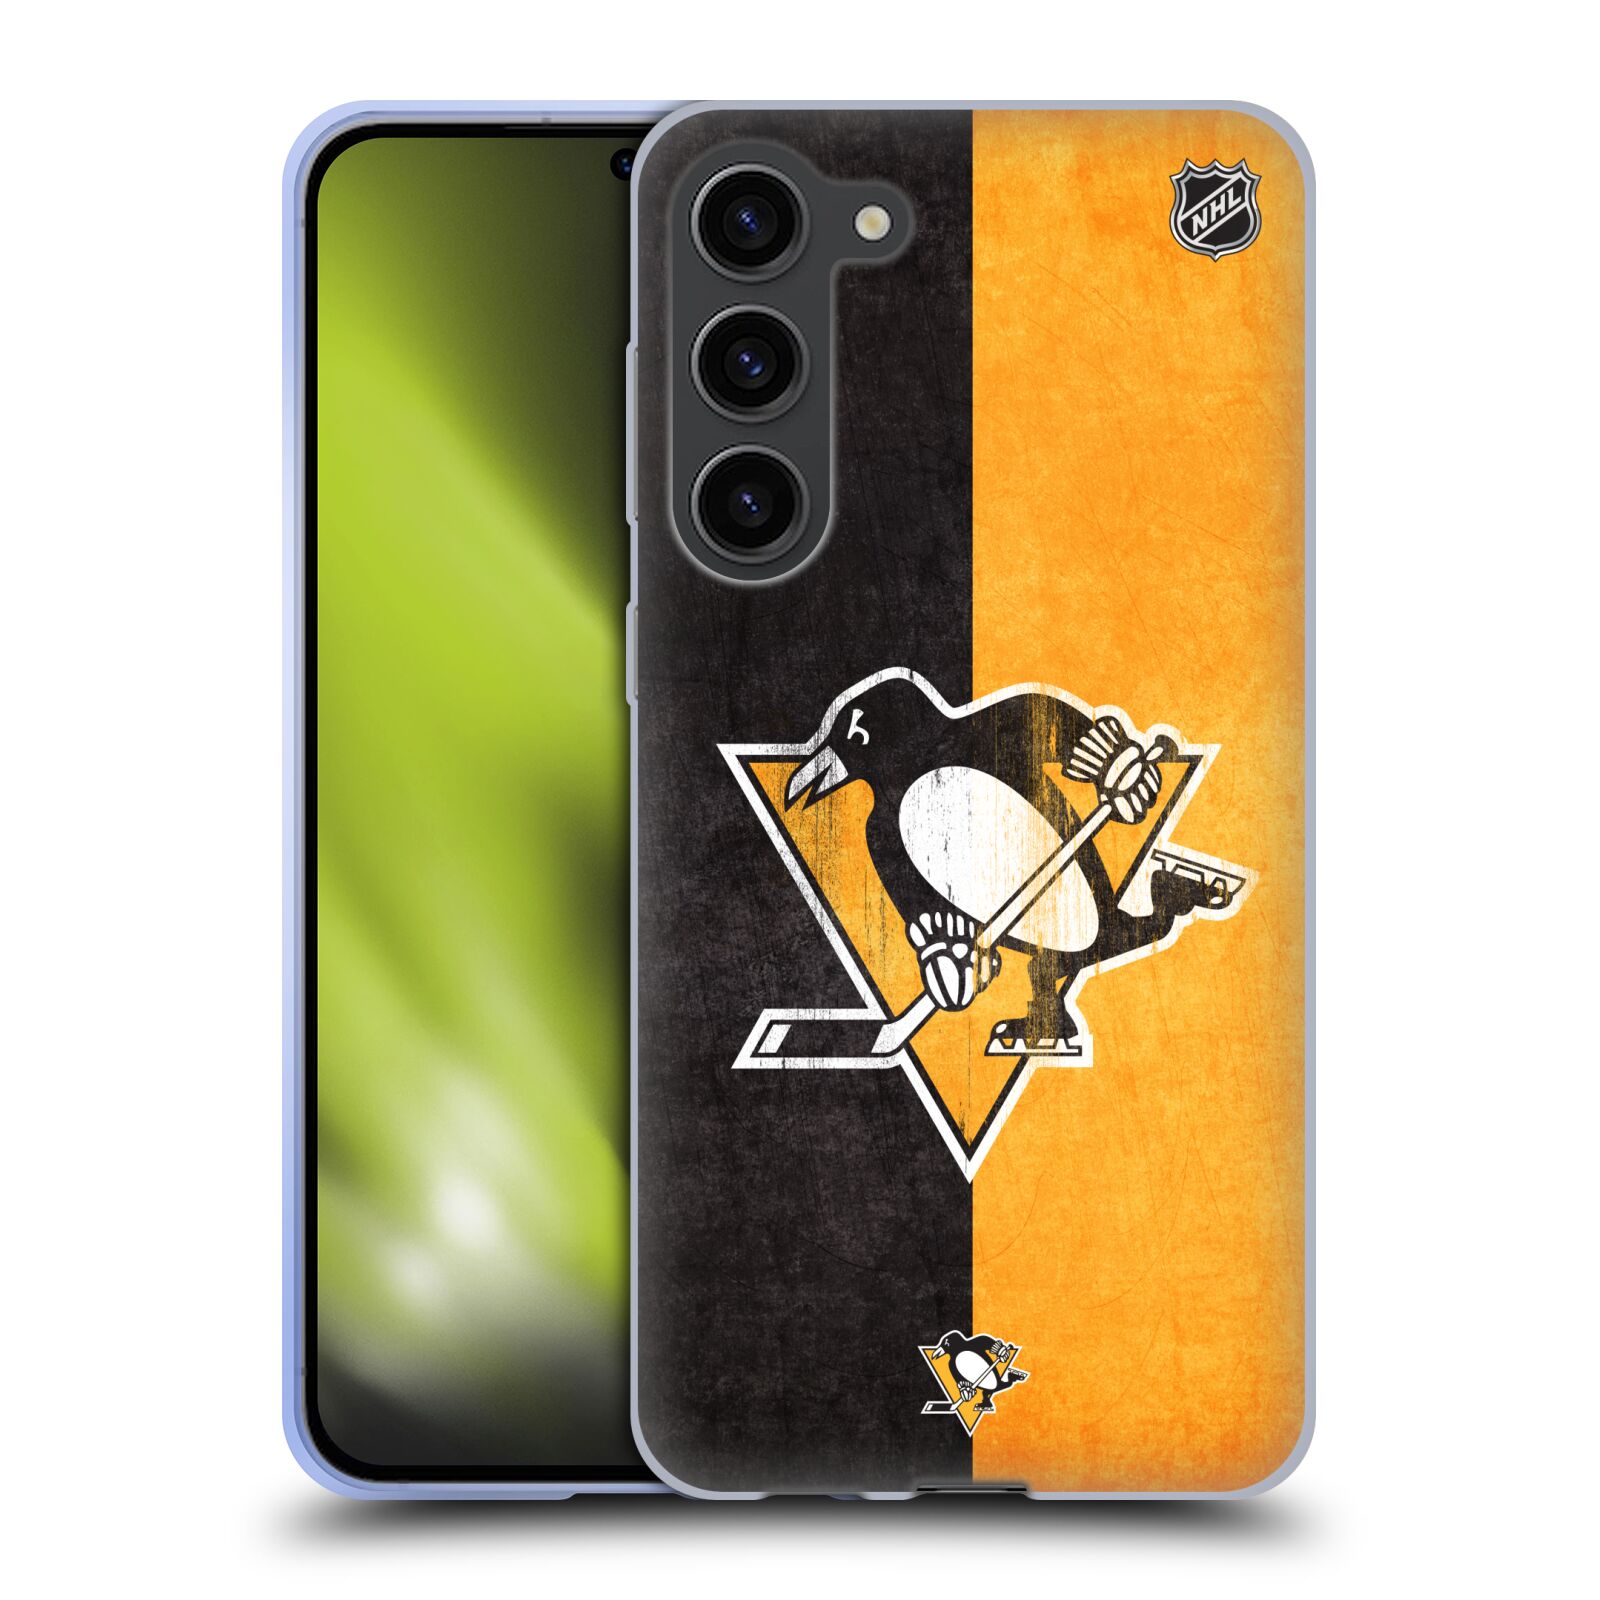 Silikonové pouzdro na mobil Samsung Galaxy S23 Plus - NHL - Půlené logo Pittsburgh Penguins (Silikonový kryt, obal, pouzdro na mobilní telefon Samsung Galaxy S23 Plus s licencovaným motivem NHL - Půlené logo Pittsburgh Penguins)